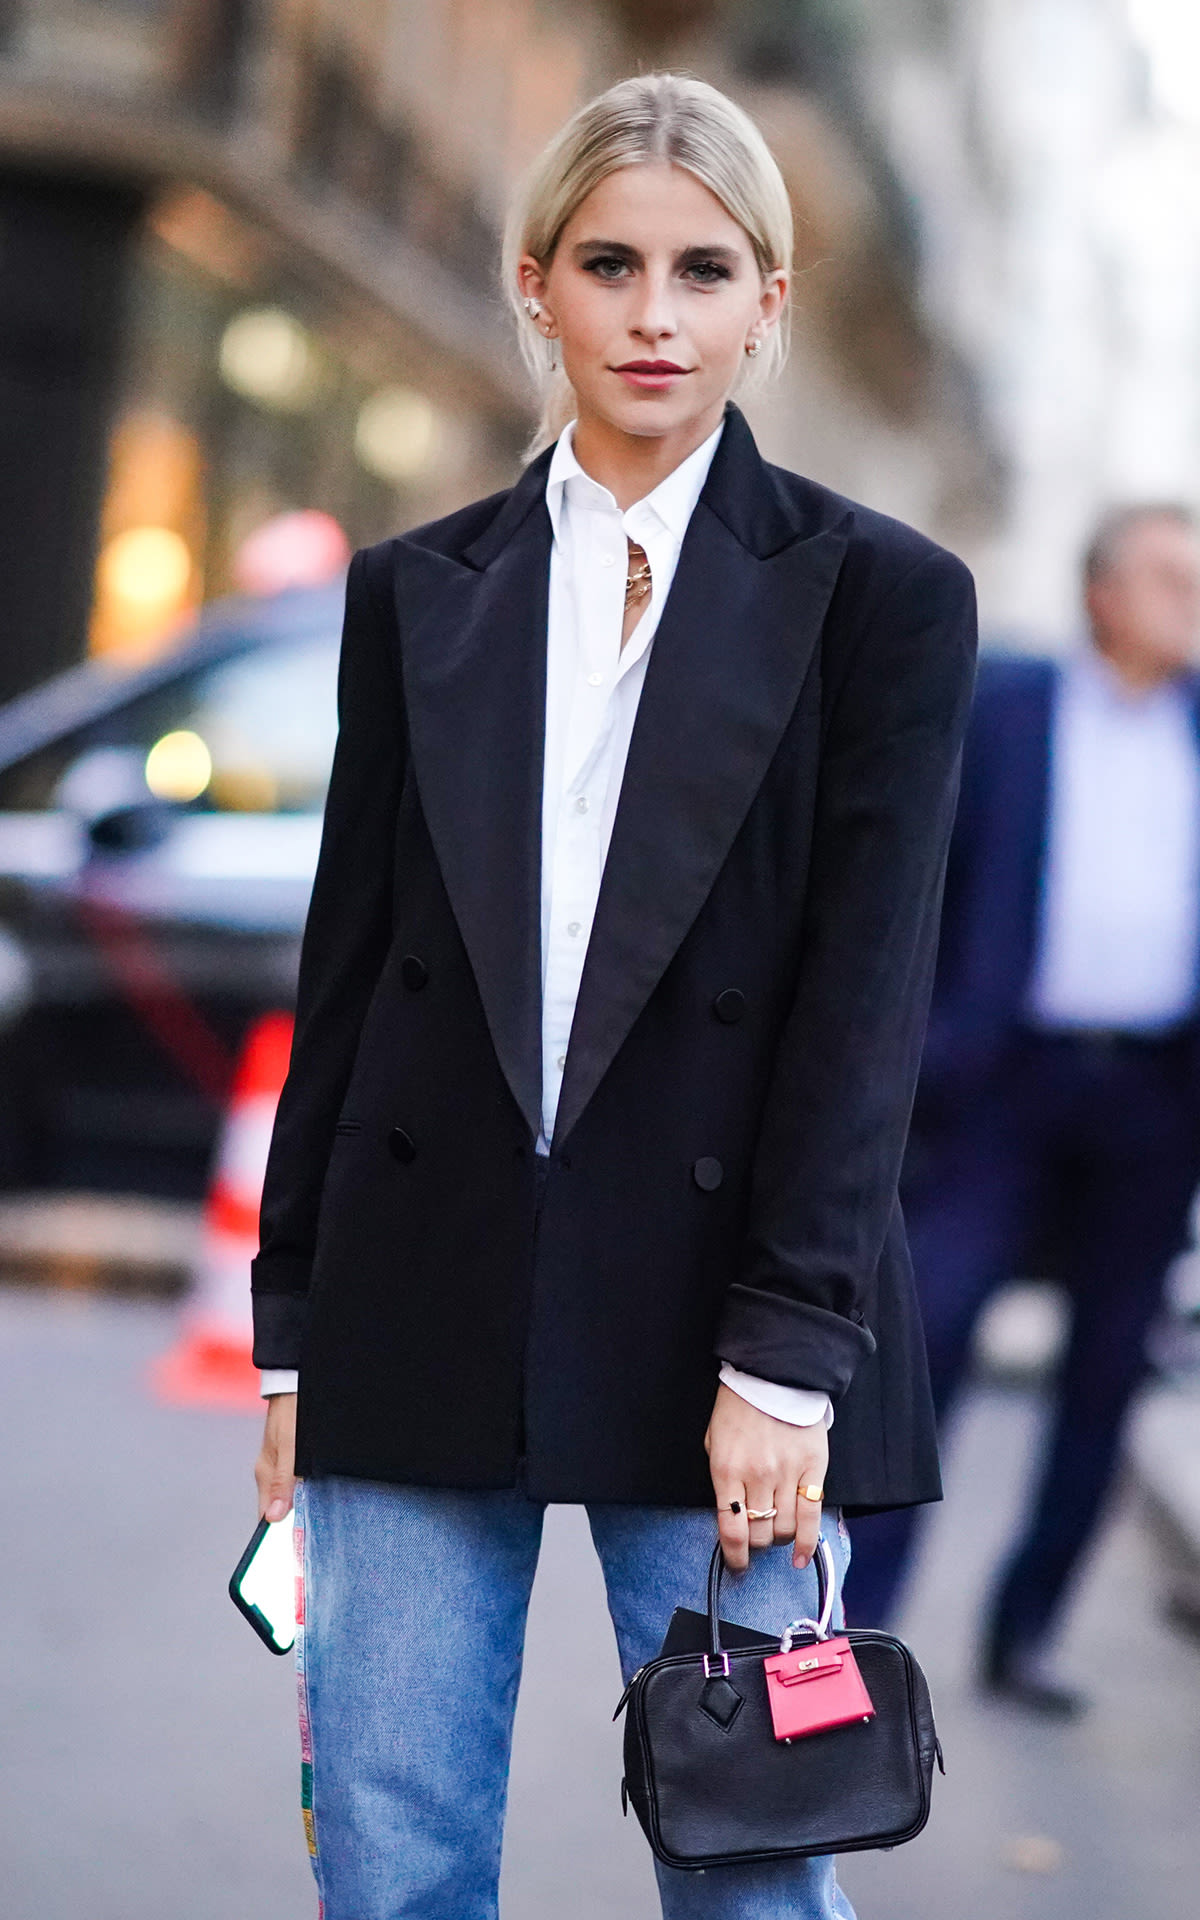 Street style star wearing black blazer